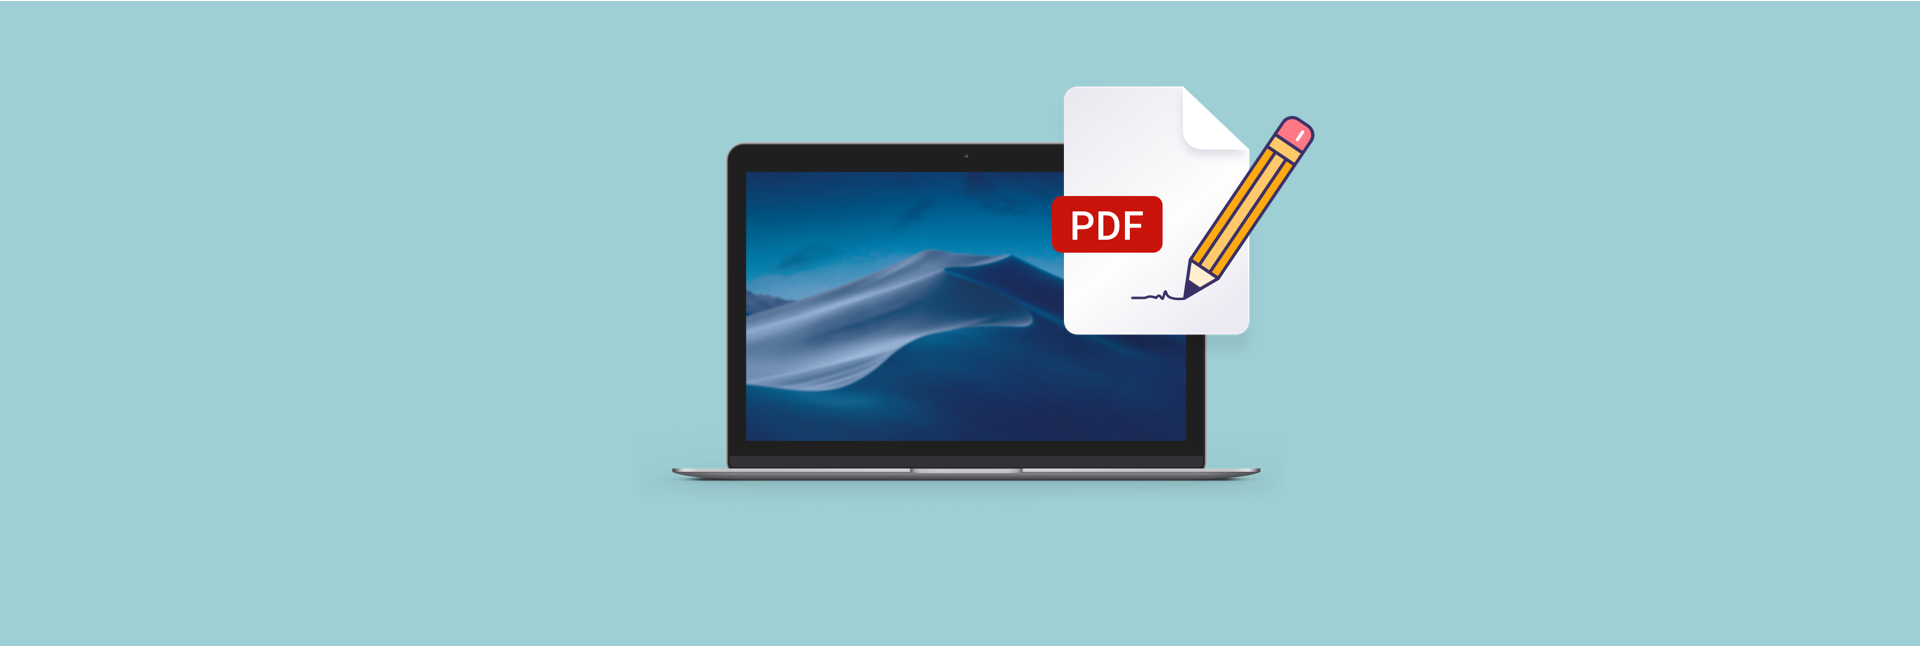 best full function pdf editor for mac